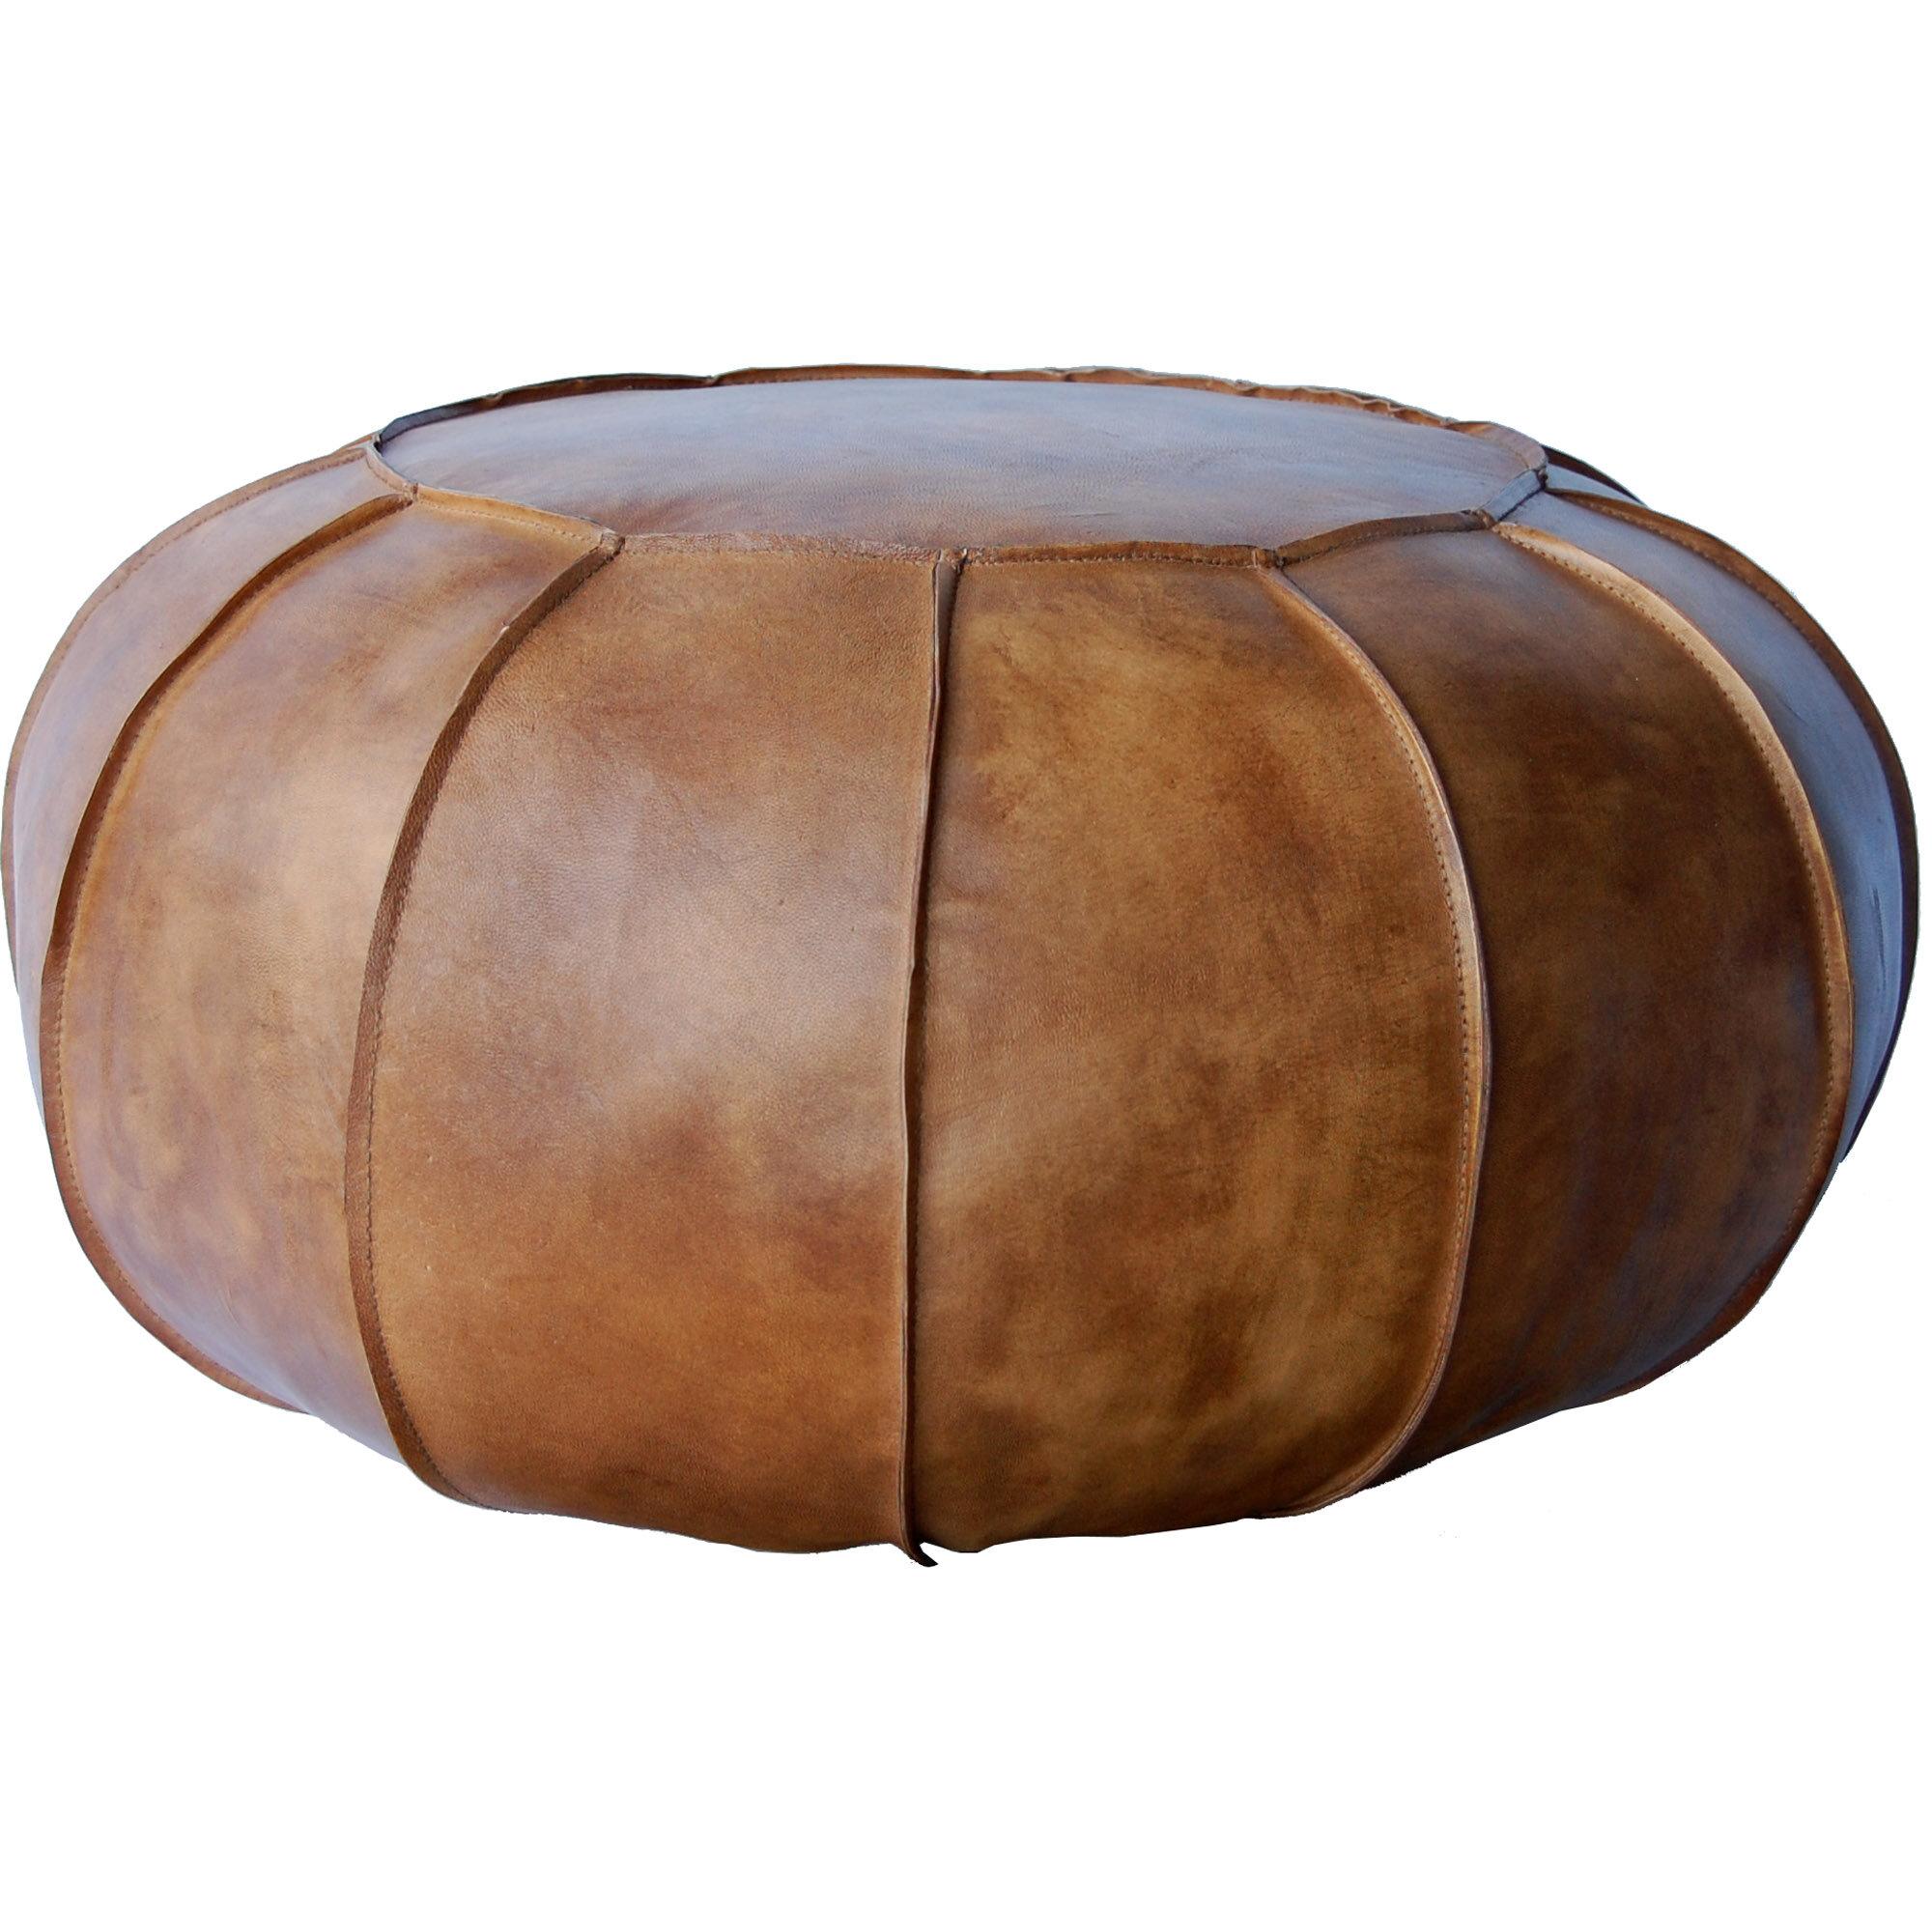  Gustav rund læderpuf - antikbrun fra Trademark Living i Læder (Varenr: MA1204)